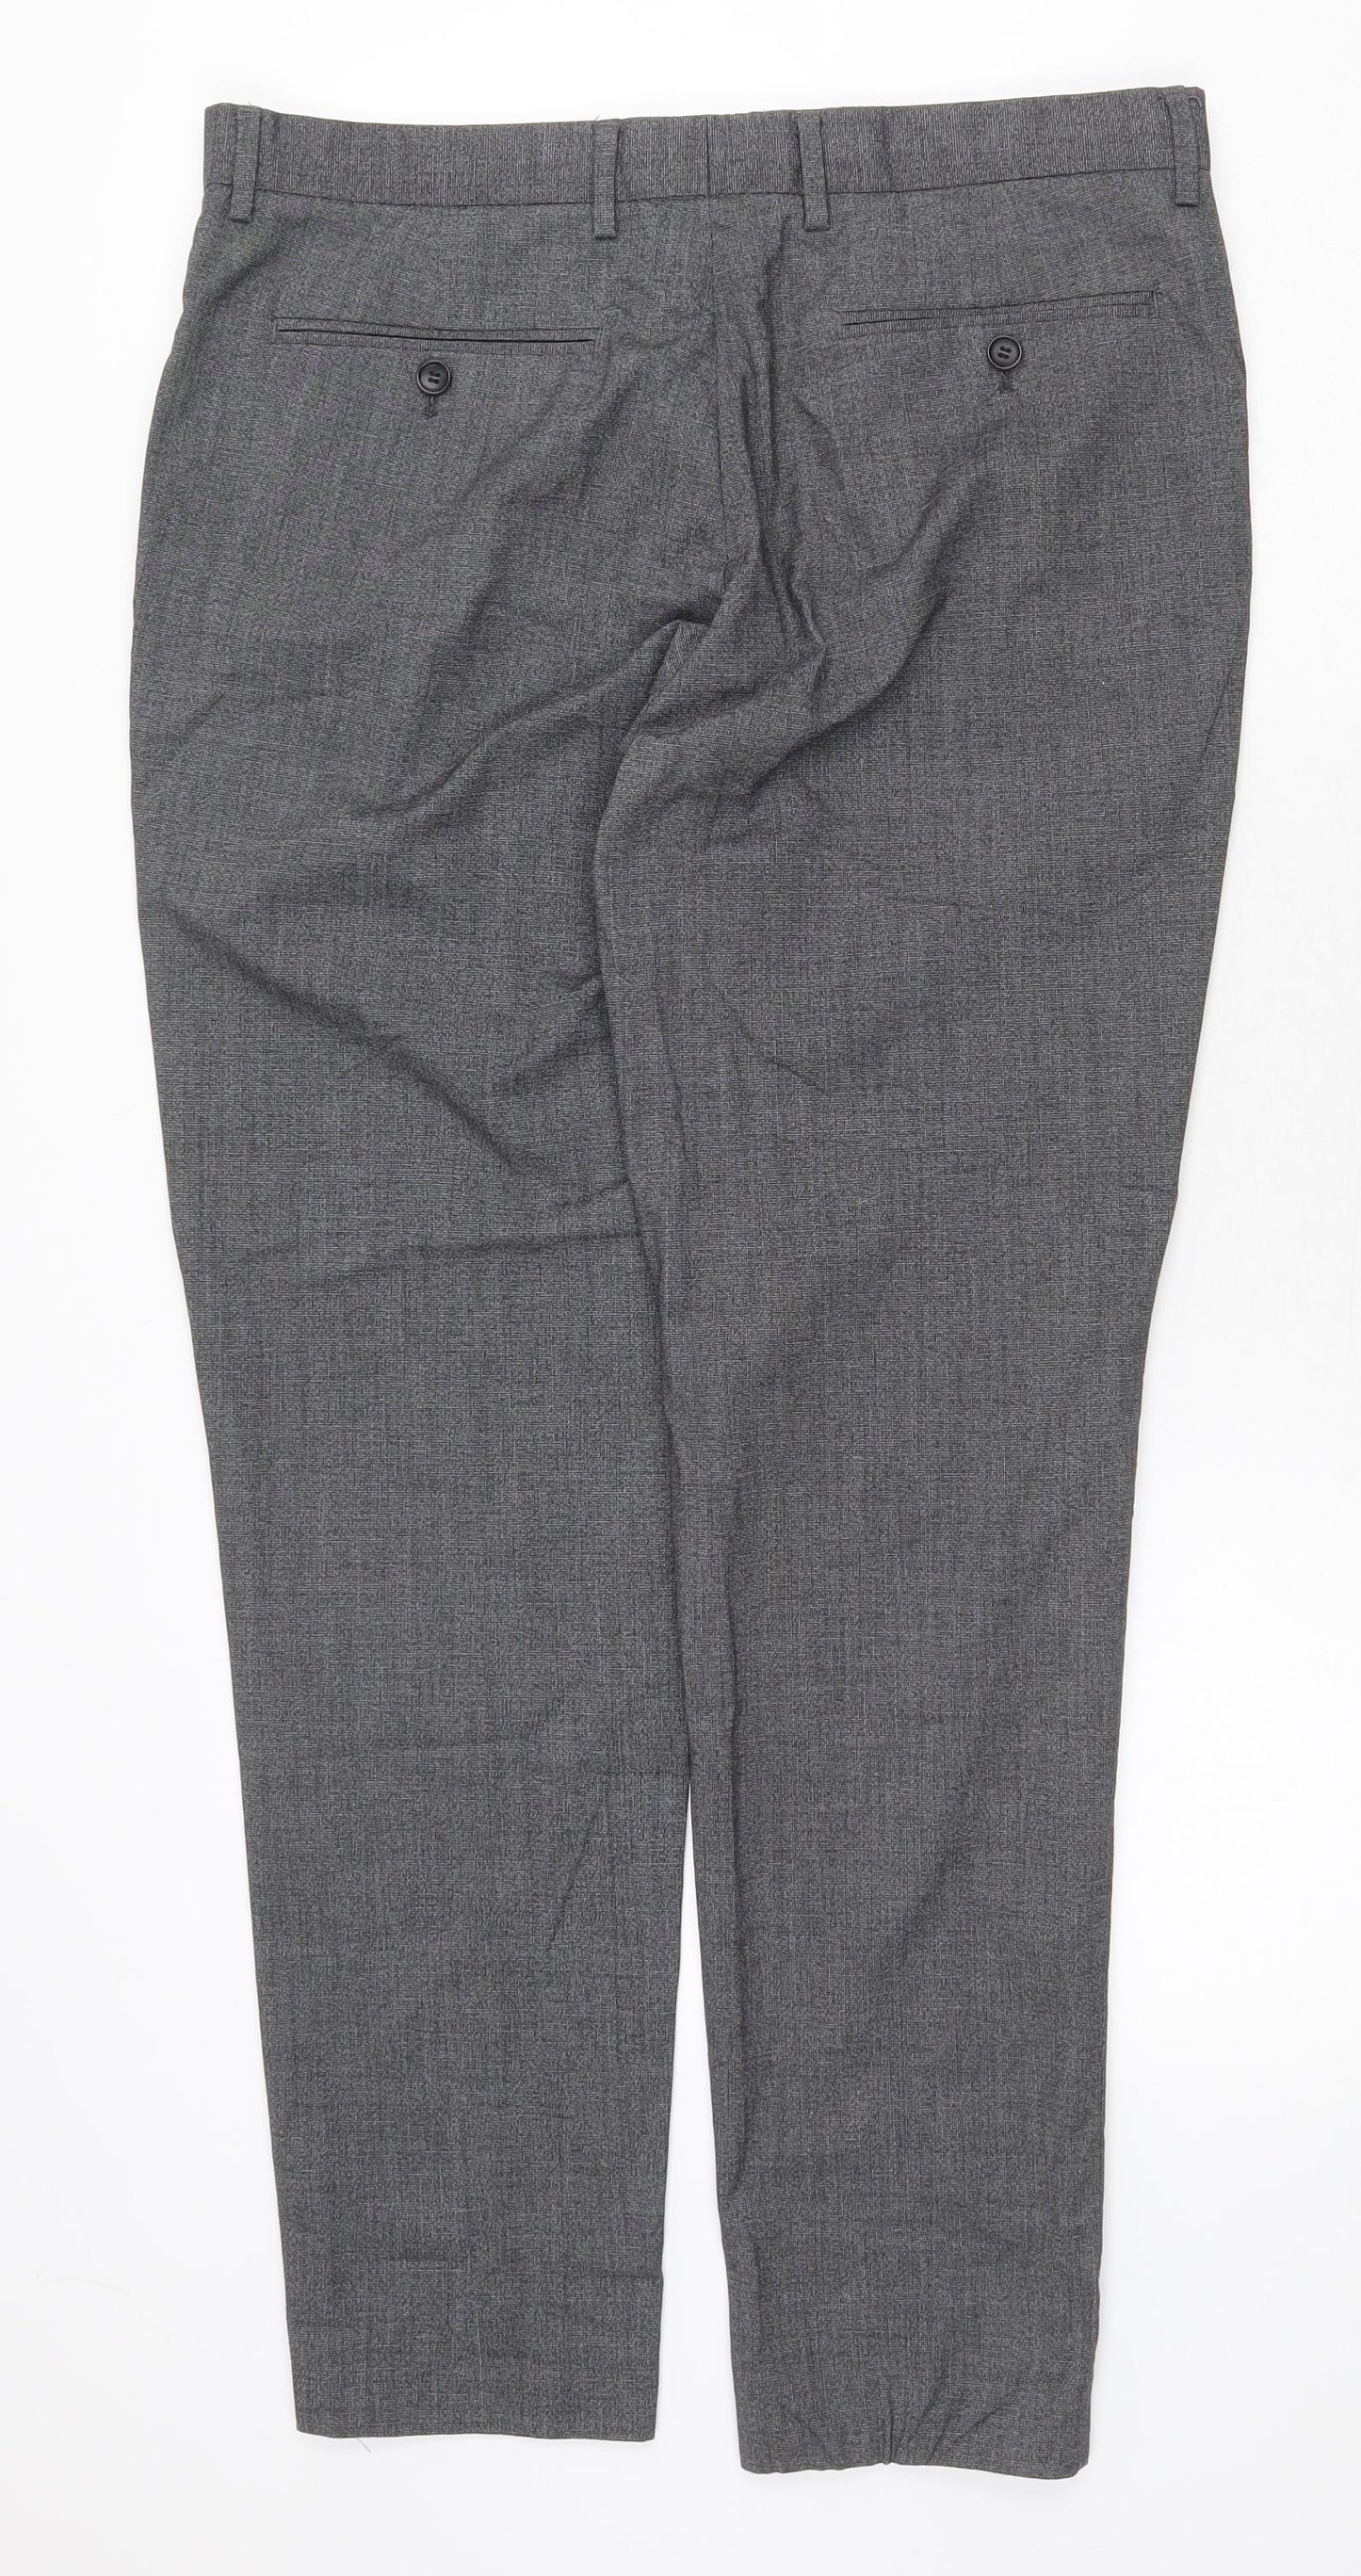 Primark Mens Grey Polyester Dress Pants Trousers Size 34 in Regular Zip